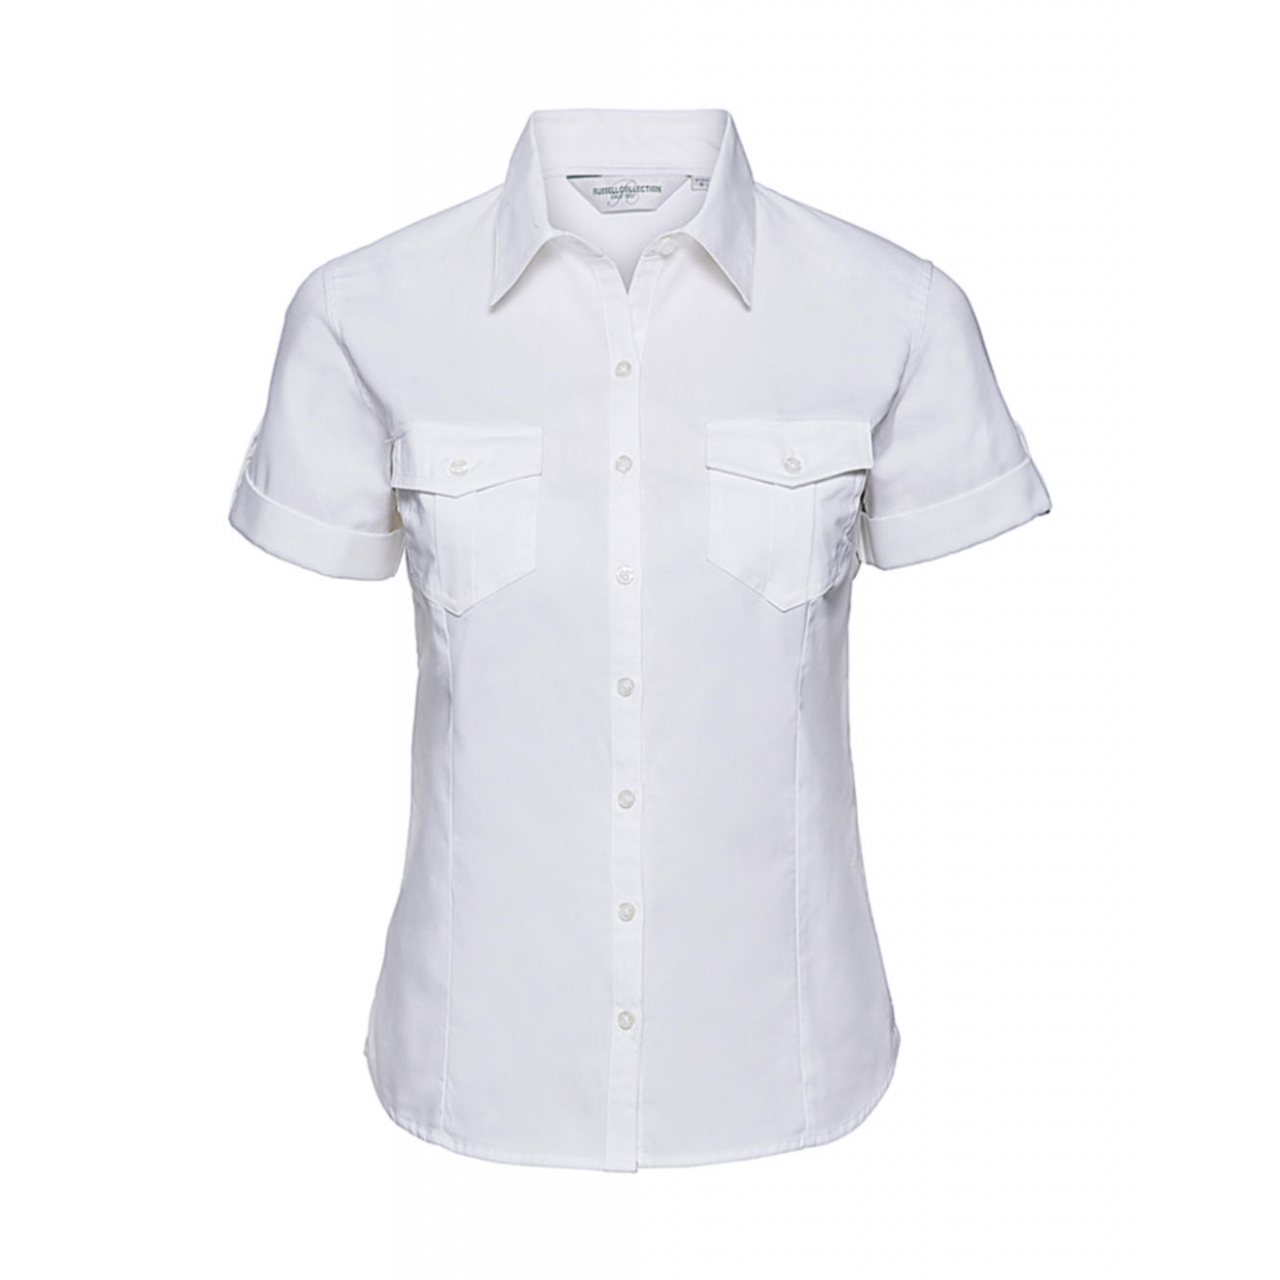 Košile dámská krátký rukáv Rusell Roll Sleeve - bílá, XL